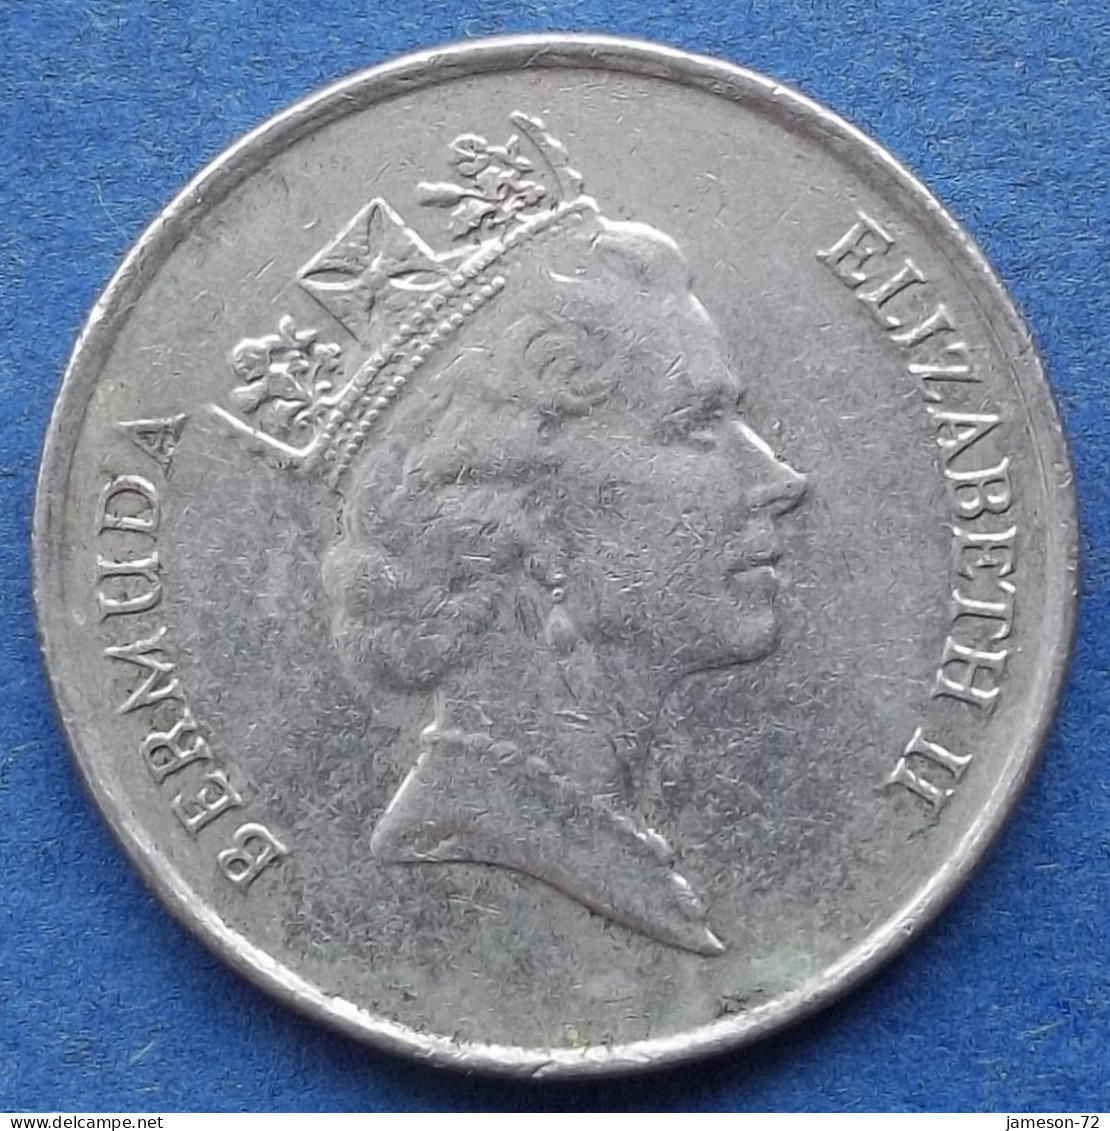 BERMUDA - 25 Cents 1995 "White-tailed Tropicbird" KM# 47 Elizabeth II Decimal Coinage (1970-2022) - Edelweiss Coins - Bermuda